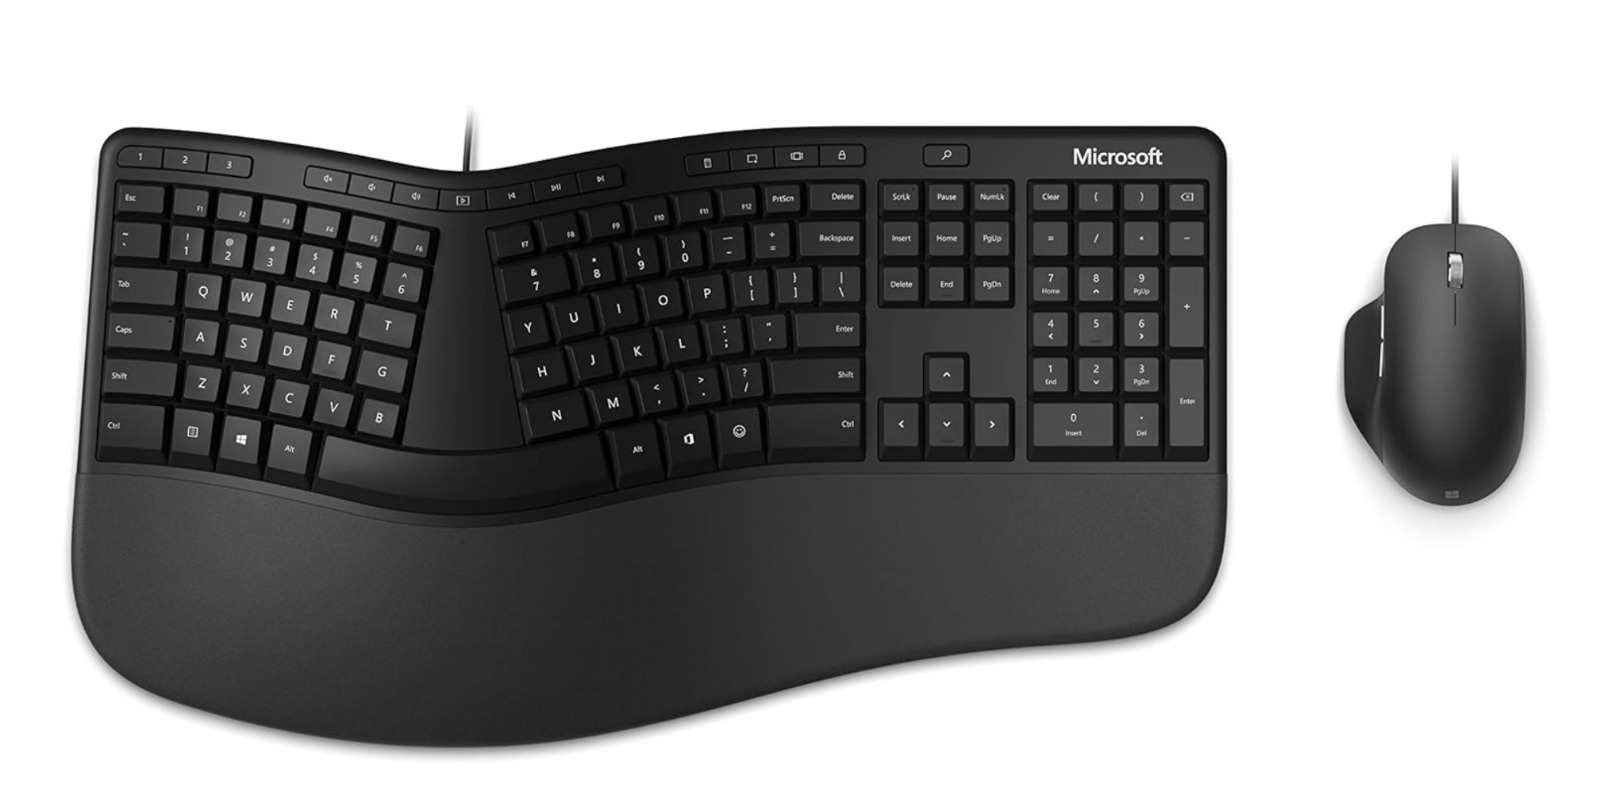 Microsoft Ergonomic (RJU-00001) Wired Desktop Keyboard and Mouse bundle